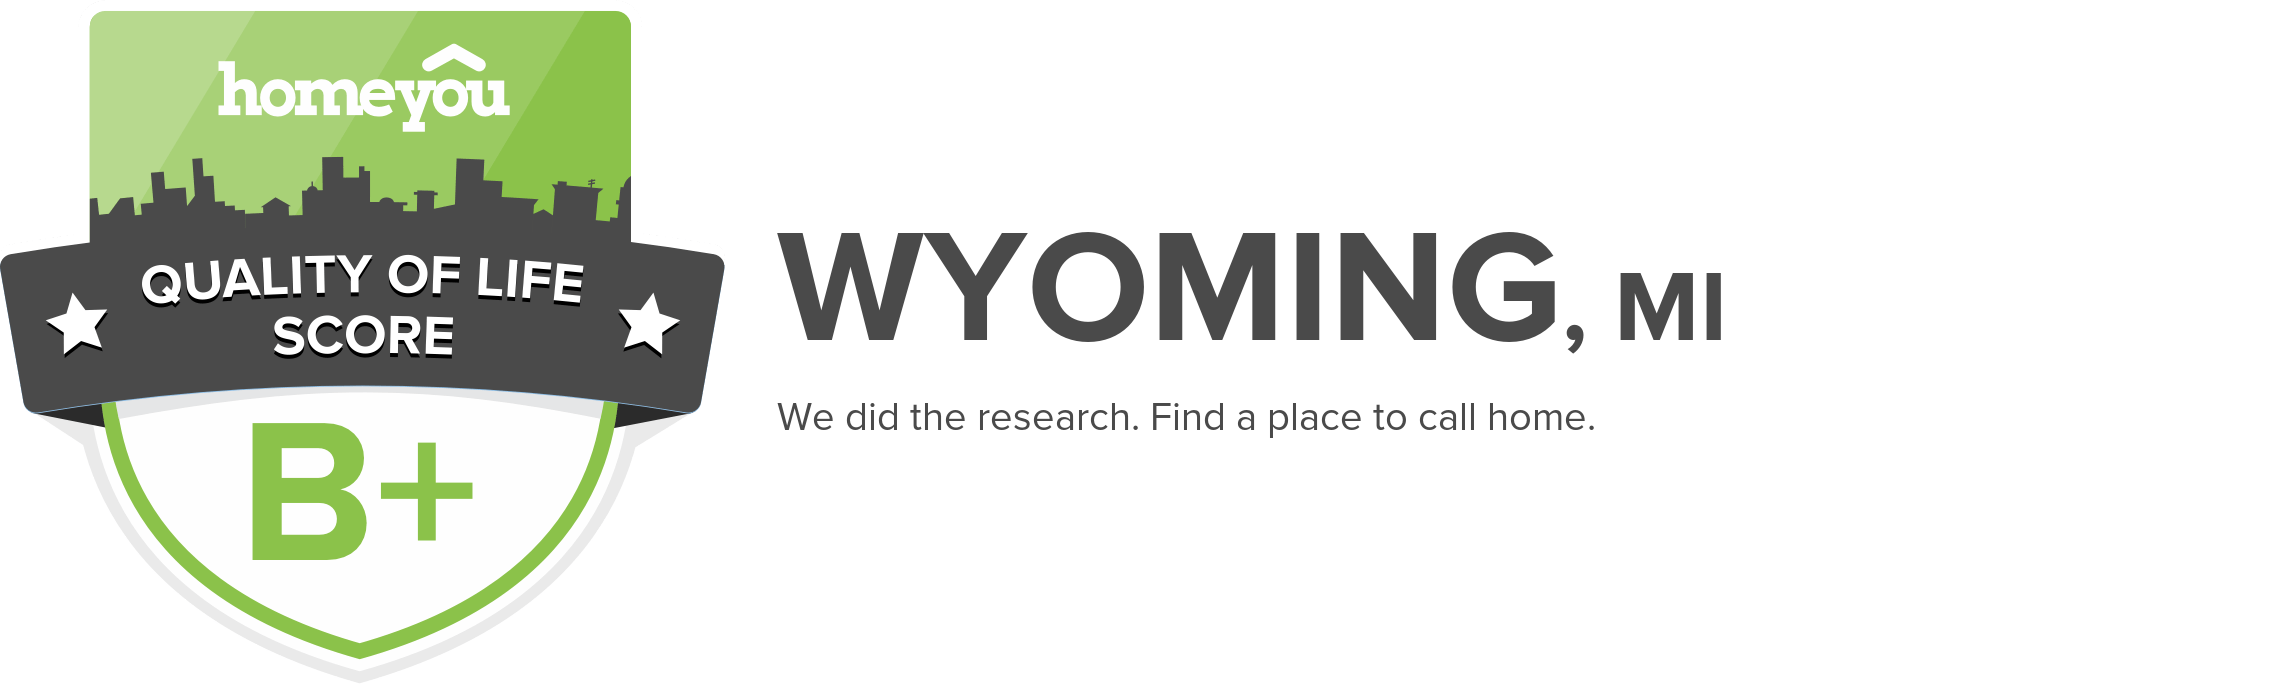 Wyoming, MI